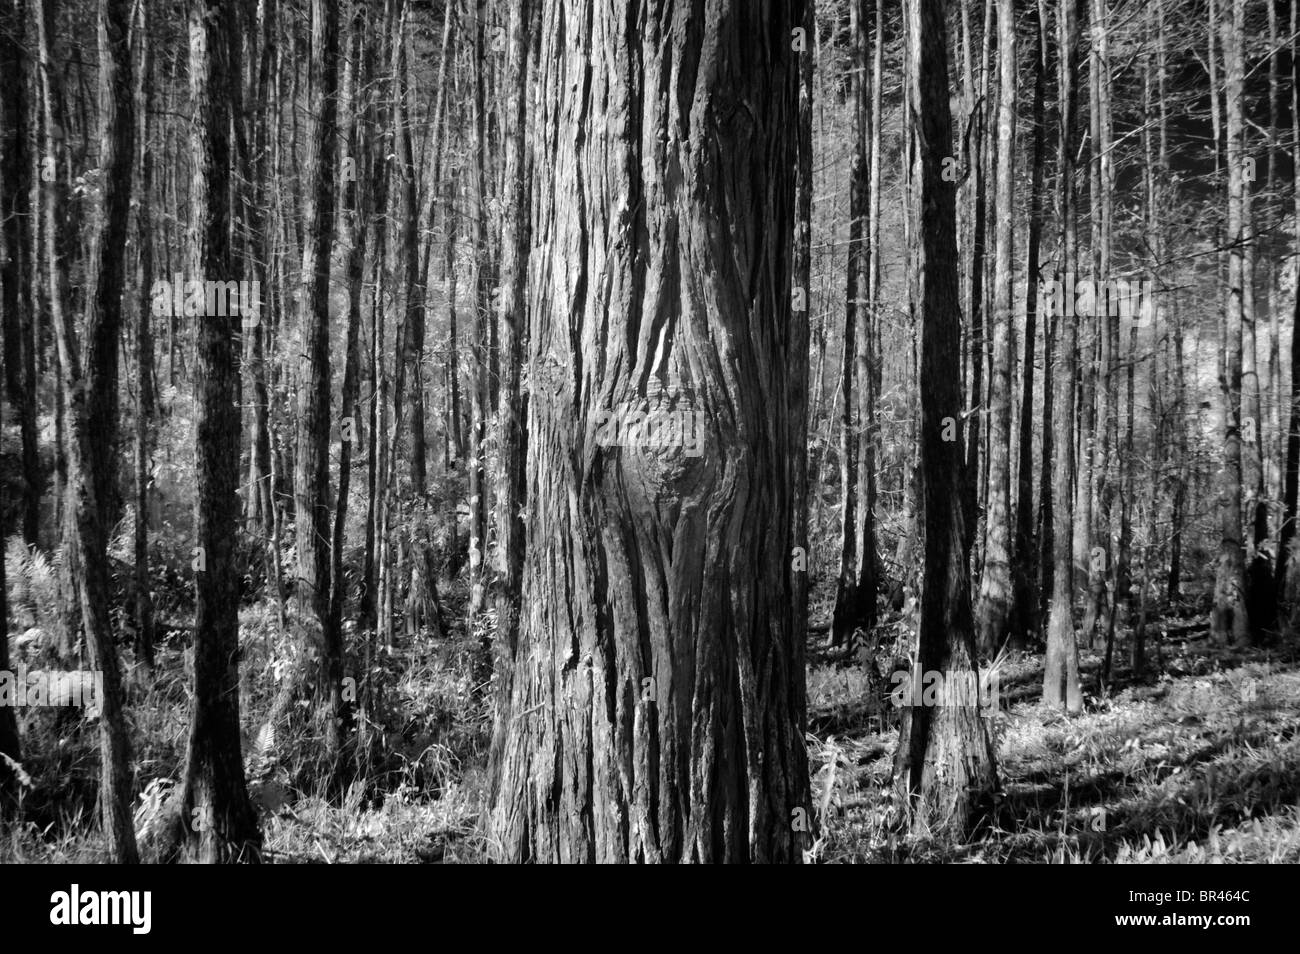 Bald cypress trees at Corkscrew Swamp Sanctuary in Florida. Stock Photo